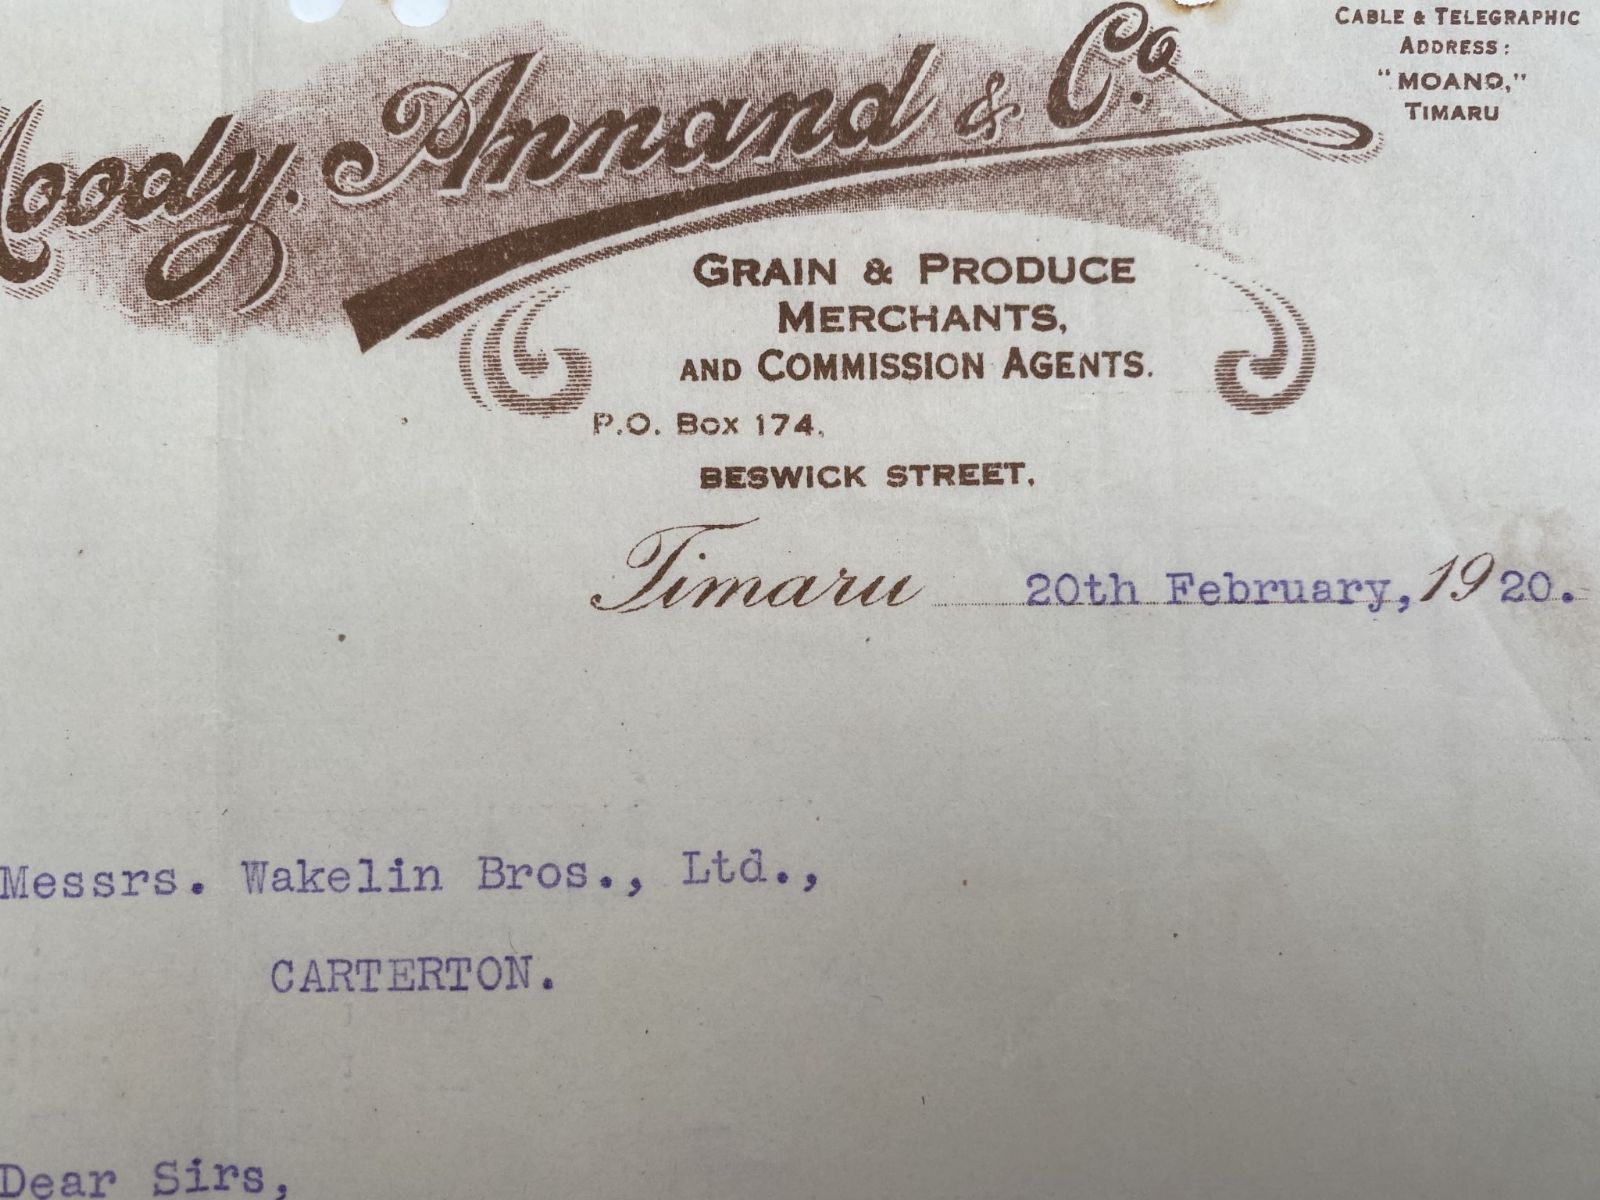 ANTIQUE LETTERHEAD: Moody Annand & Co. Ltd - Grain & Produce Merchants 1920